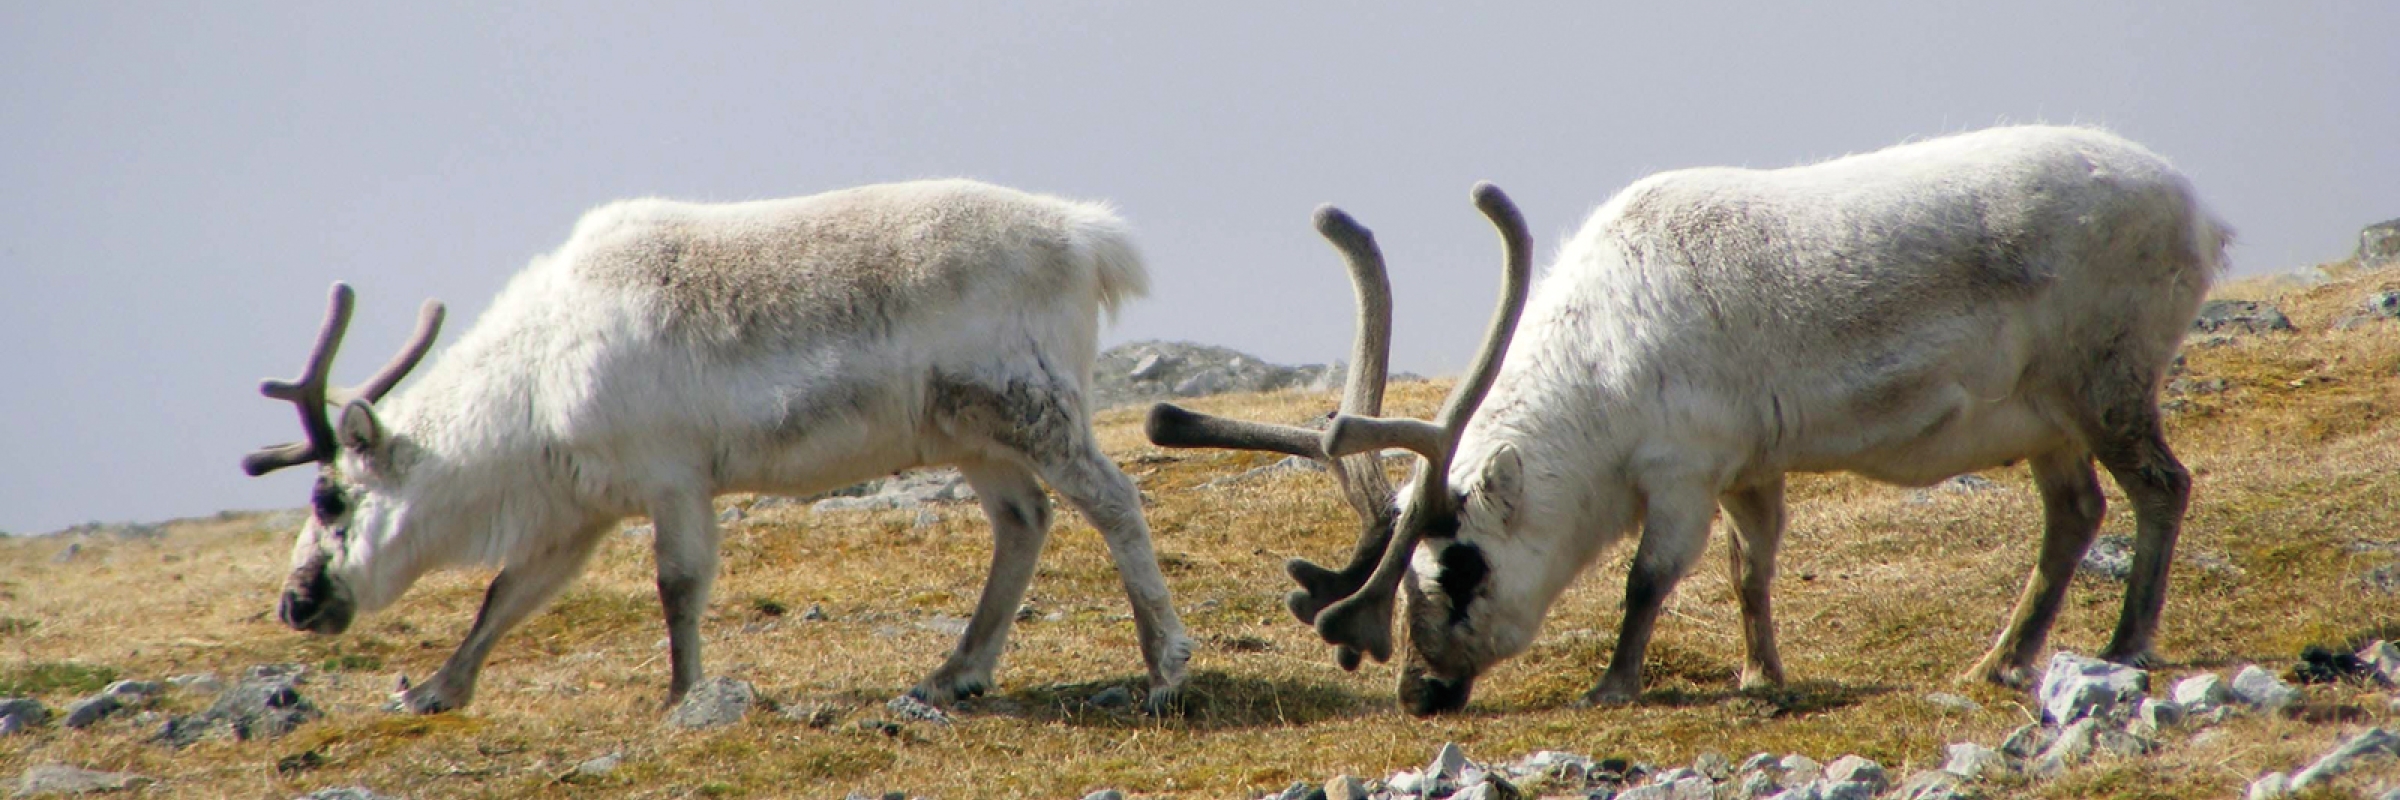 Reindeer grazing in Spitsbergen